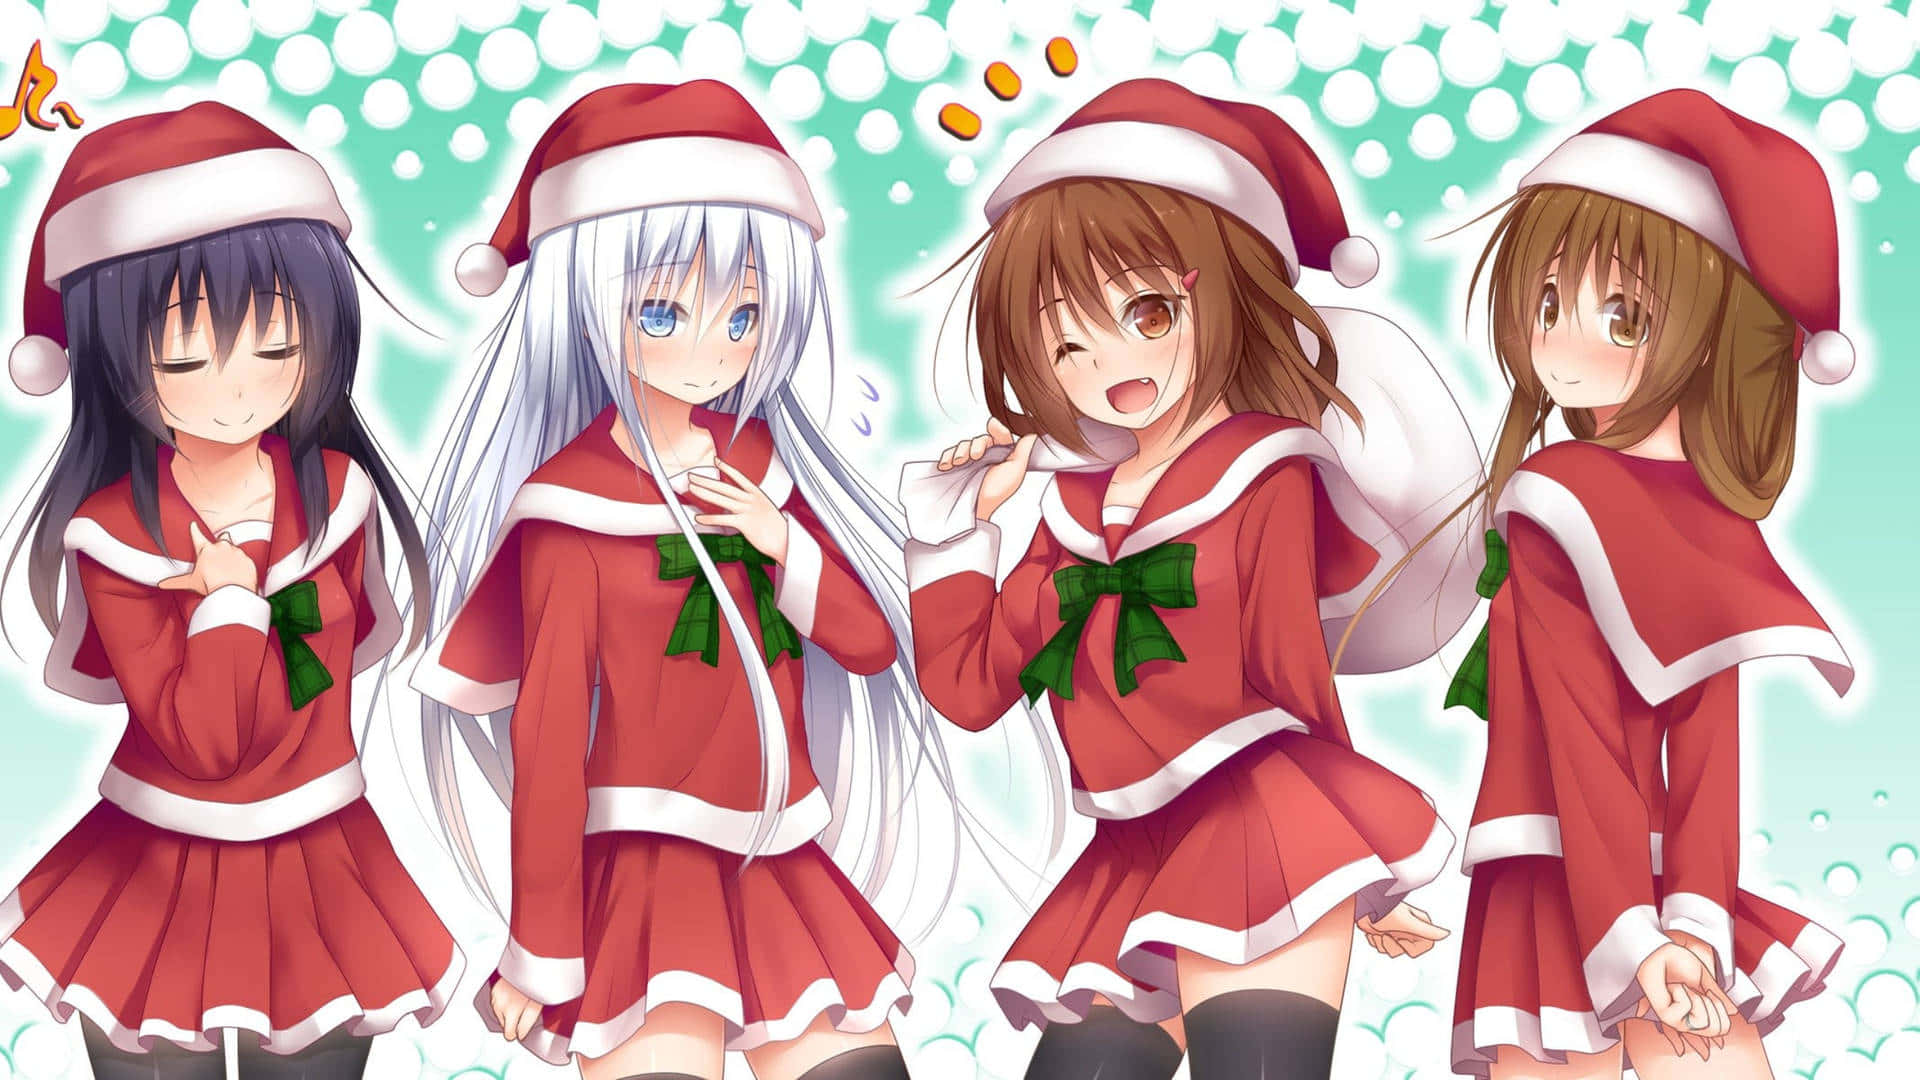 Christmas Tree Gifts Anime Santa Girl 4K Wallpaper iPhone HD Phone #6150h